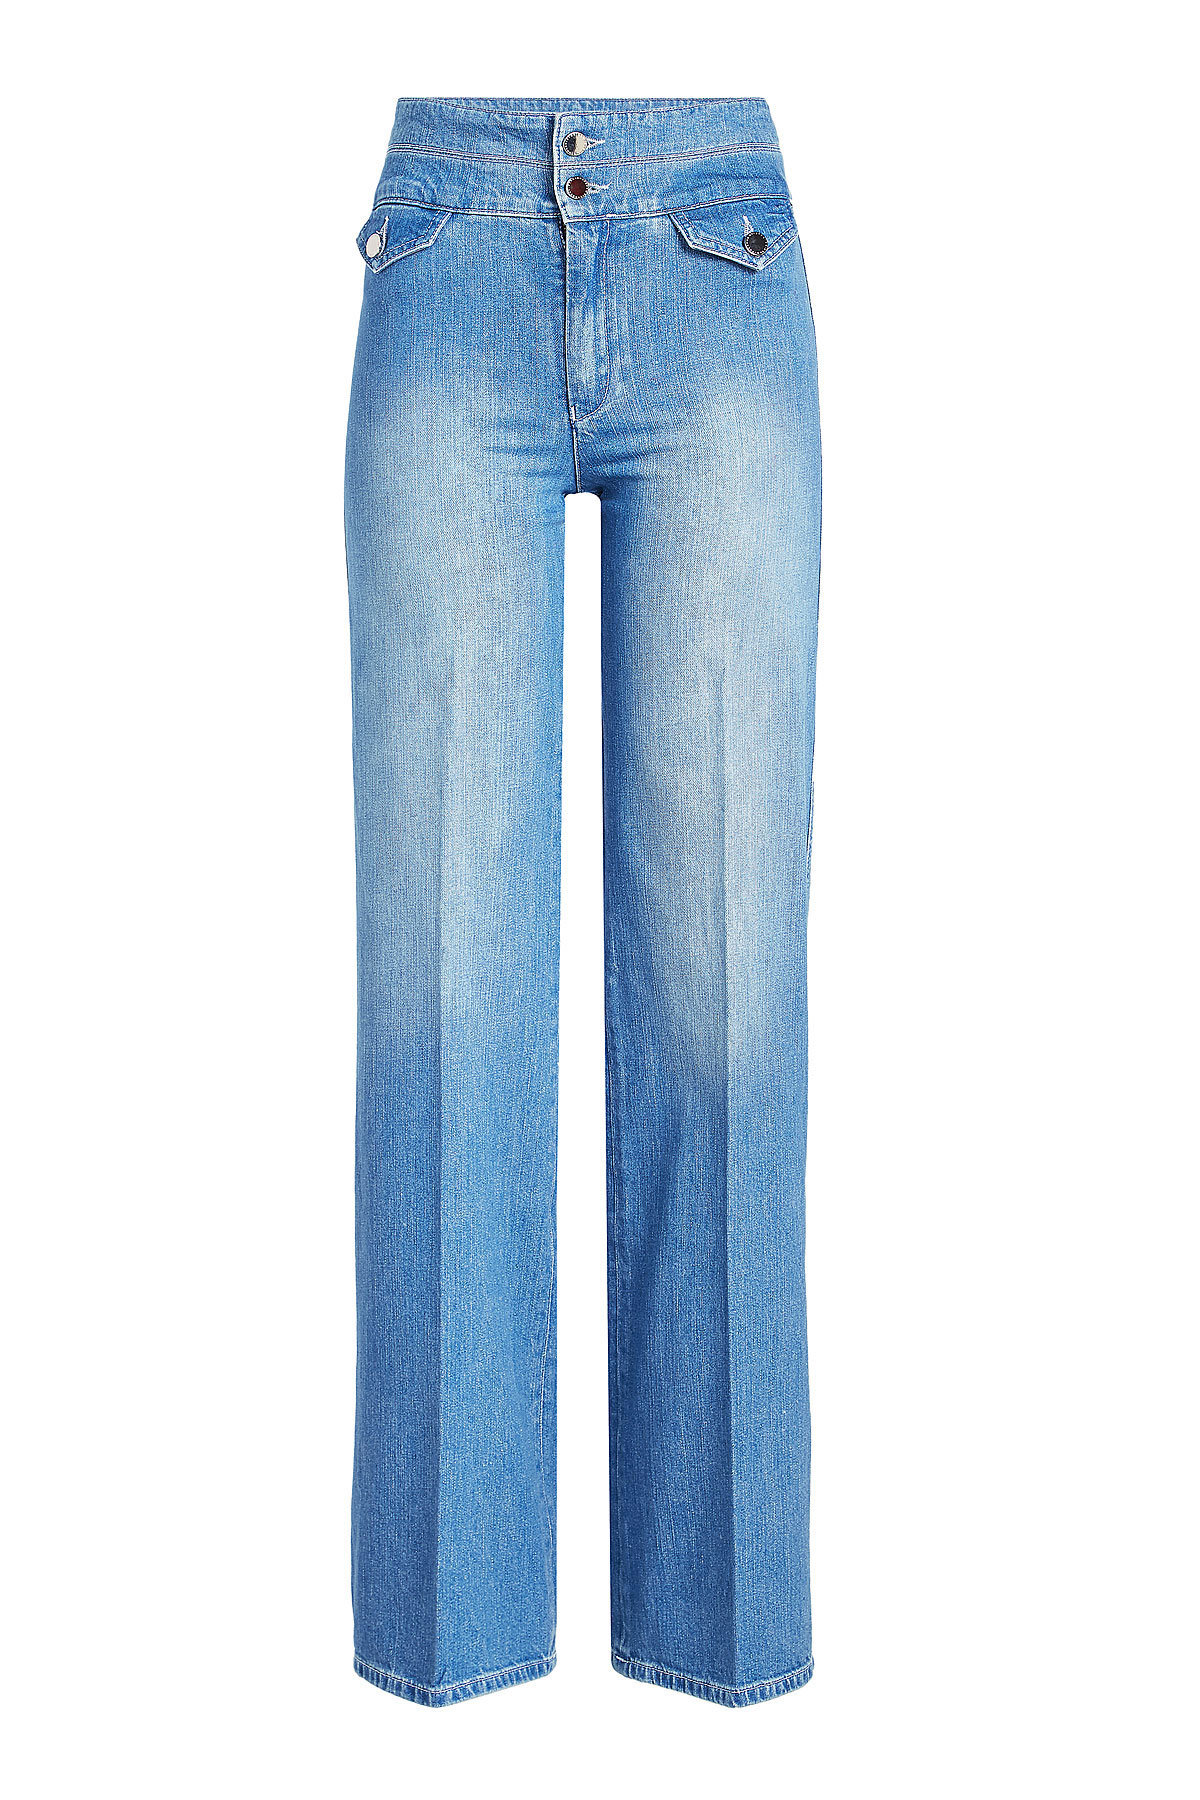 70s Wide Leg Jeans by Victoria Beckham